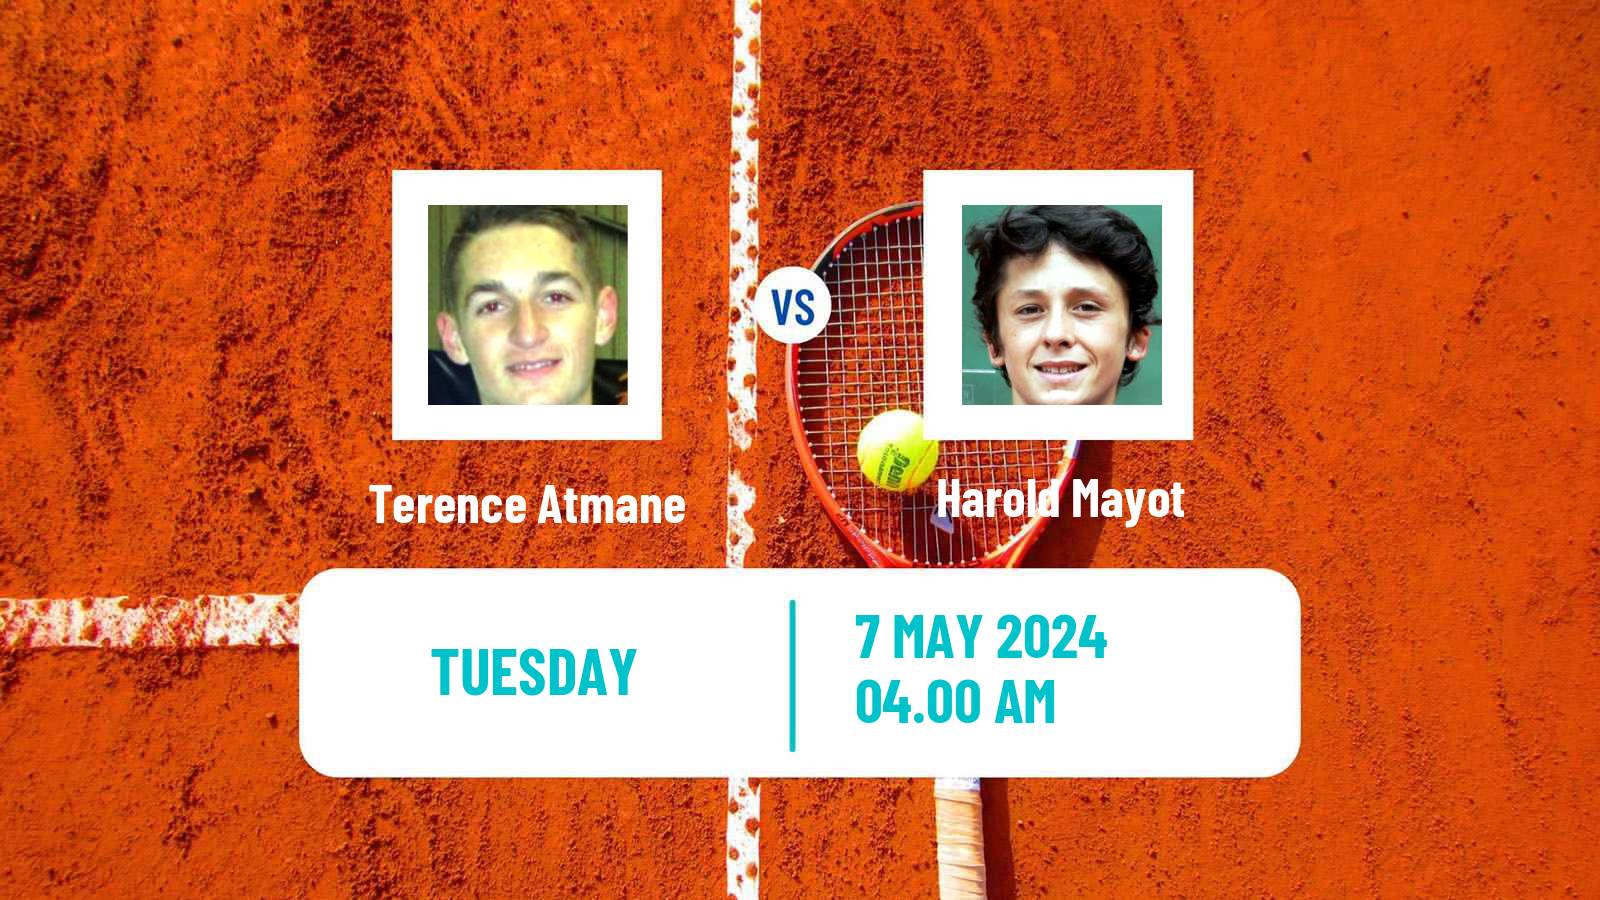 Tennis ATP Roma Terence Atmane - Harold Mayot